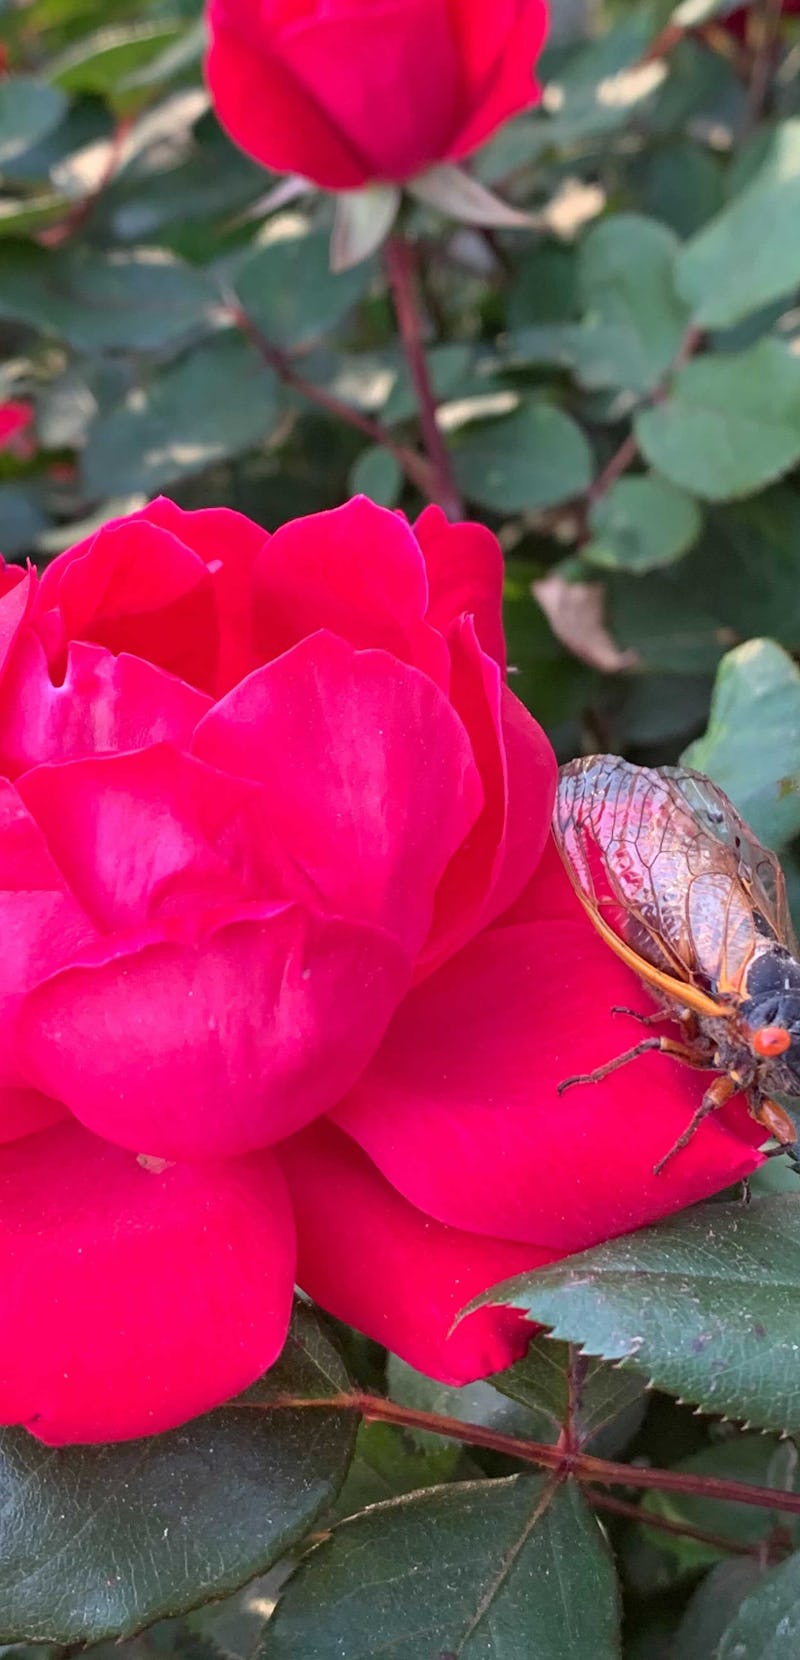 cicada on a rose